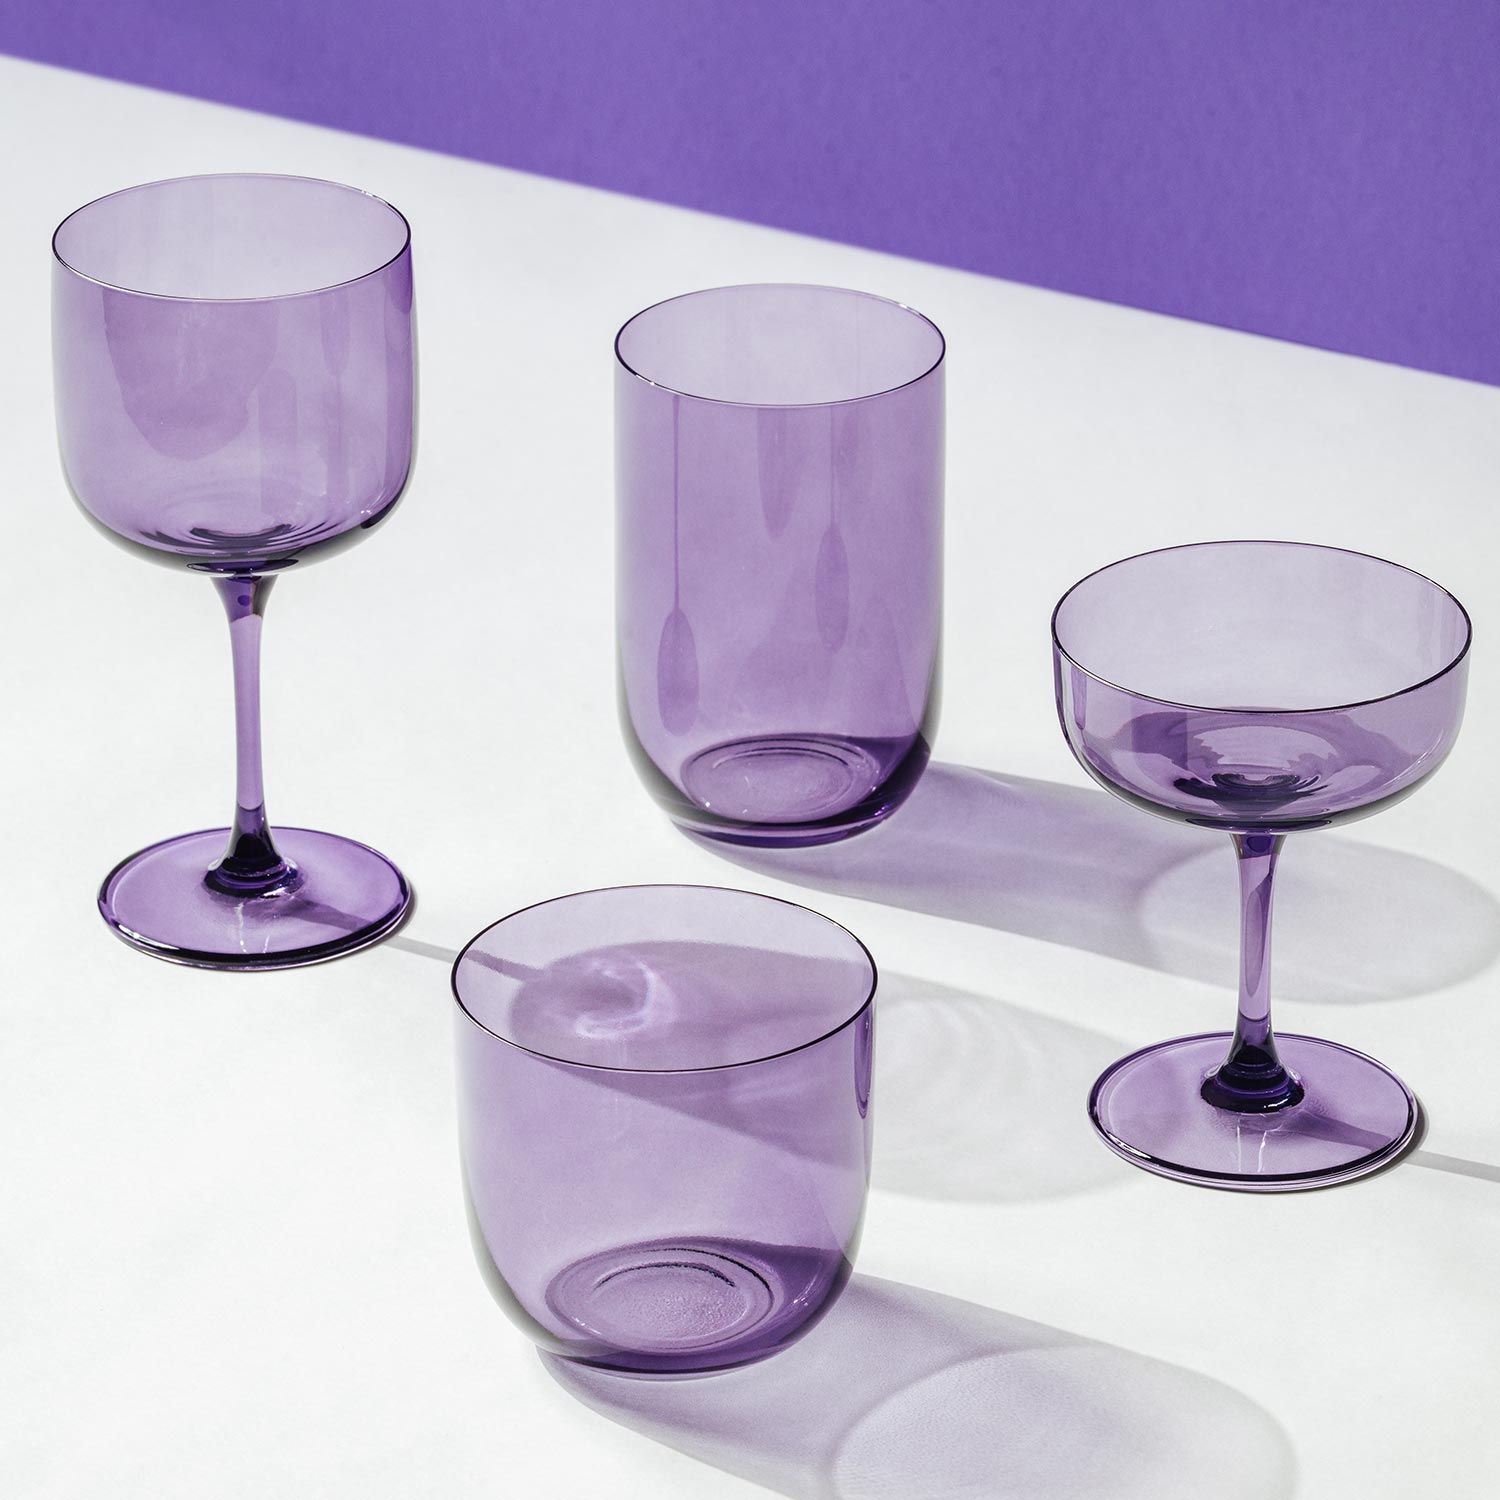 Like Lavender Набор стаканов 0.38 л, 2 шт Villeroy & Boch
https://spb.v-b.ru
г.Санкт-Петербург
eshop@v-b.spb.ru
+7(812)3801977